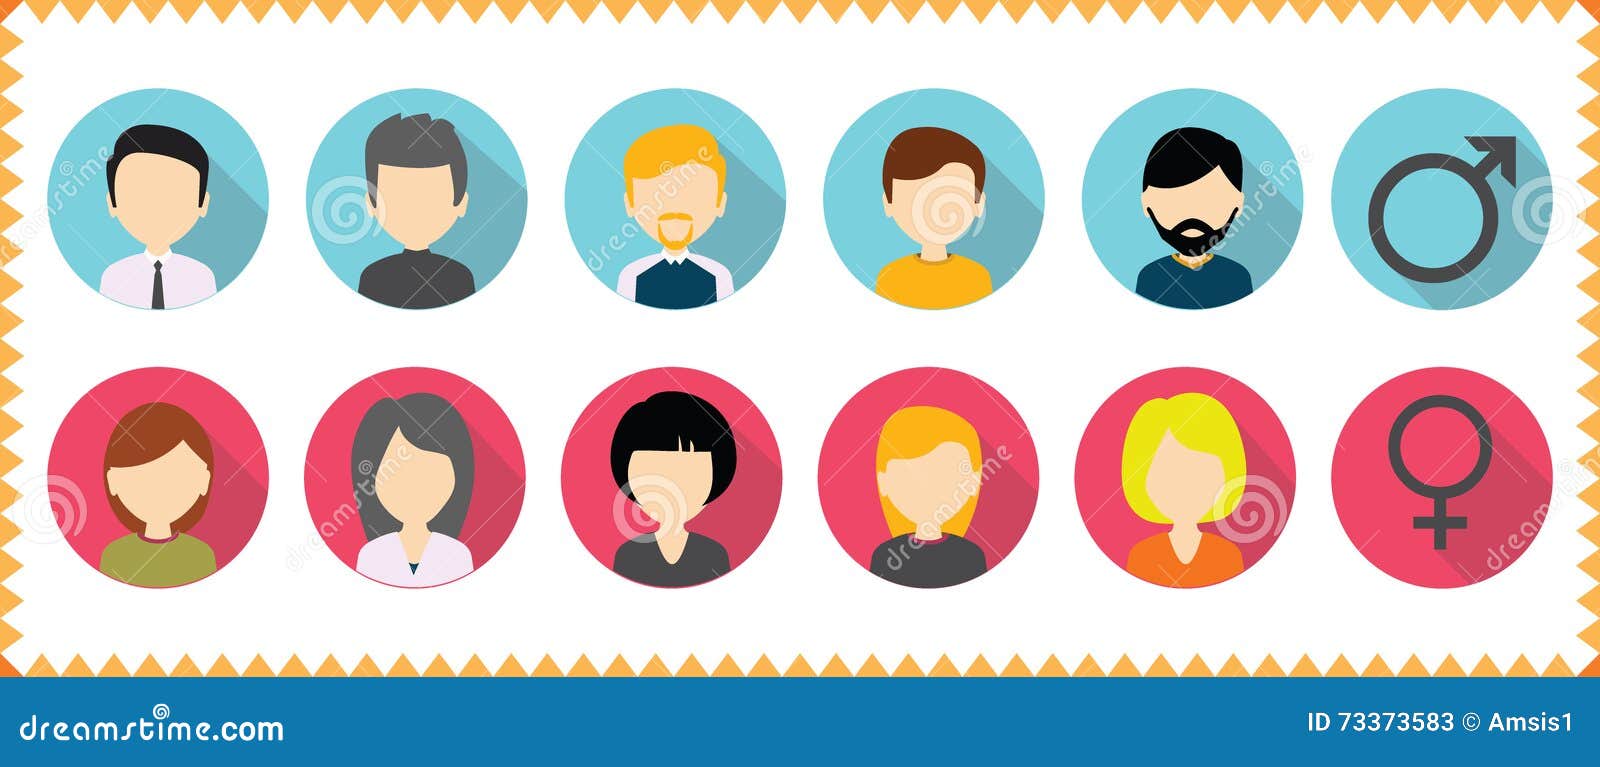  avatar profile icon set - set of people faces icons